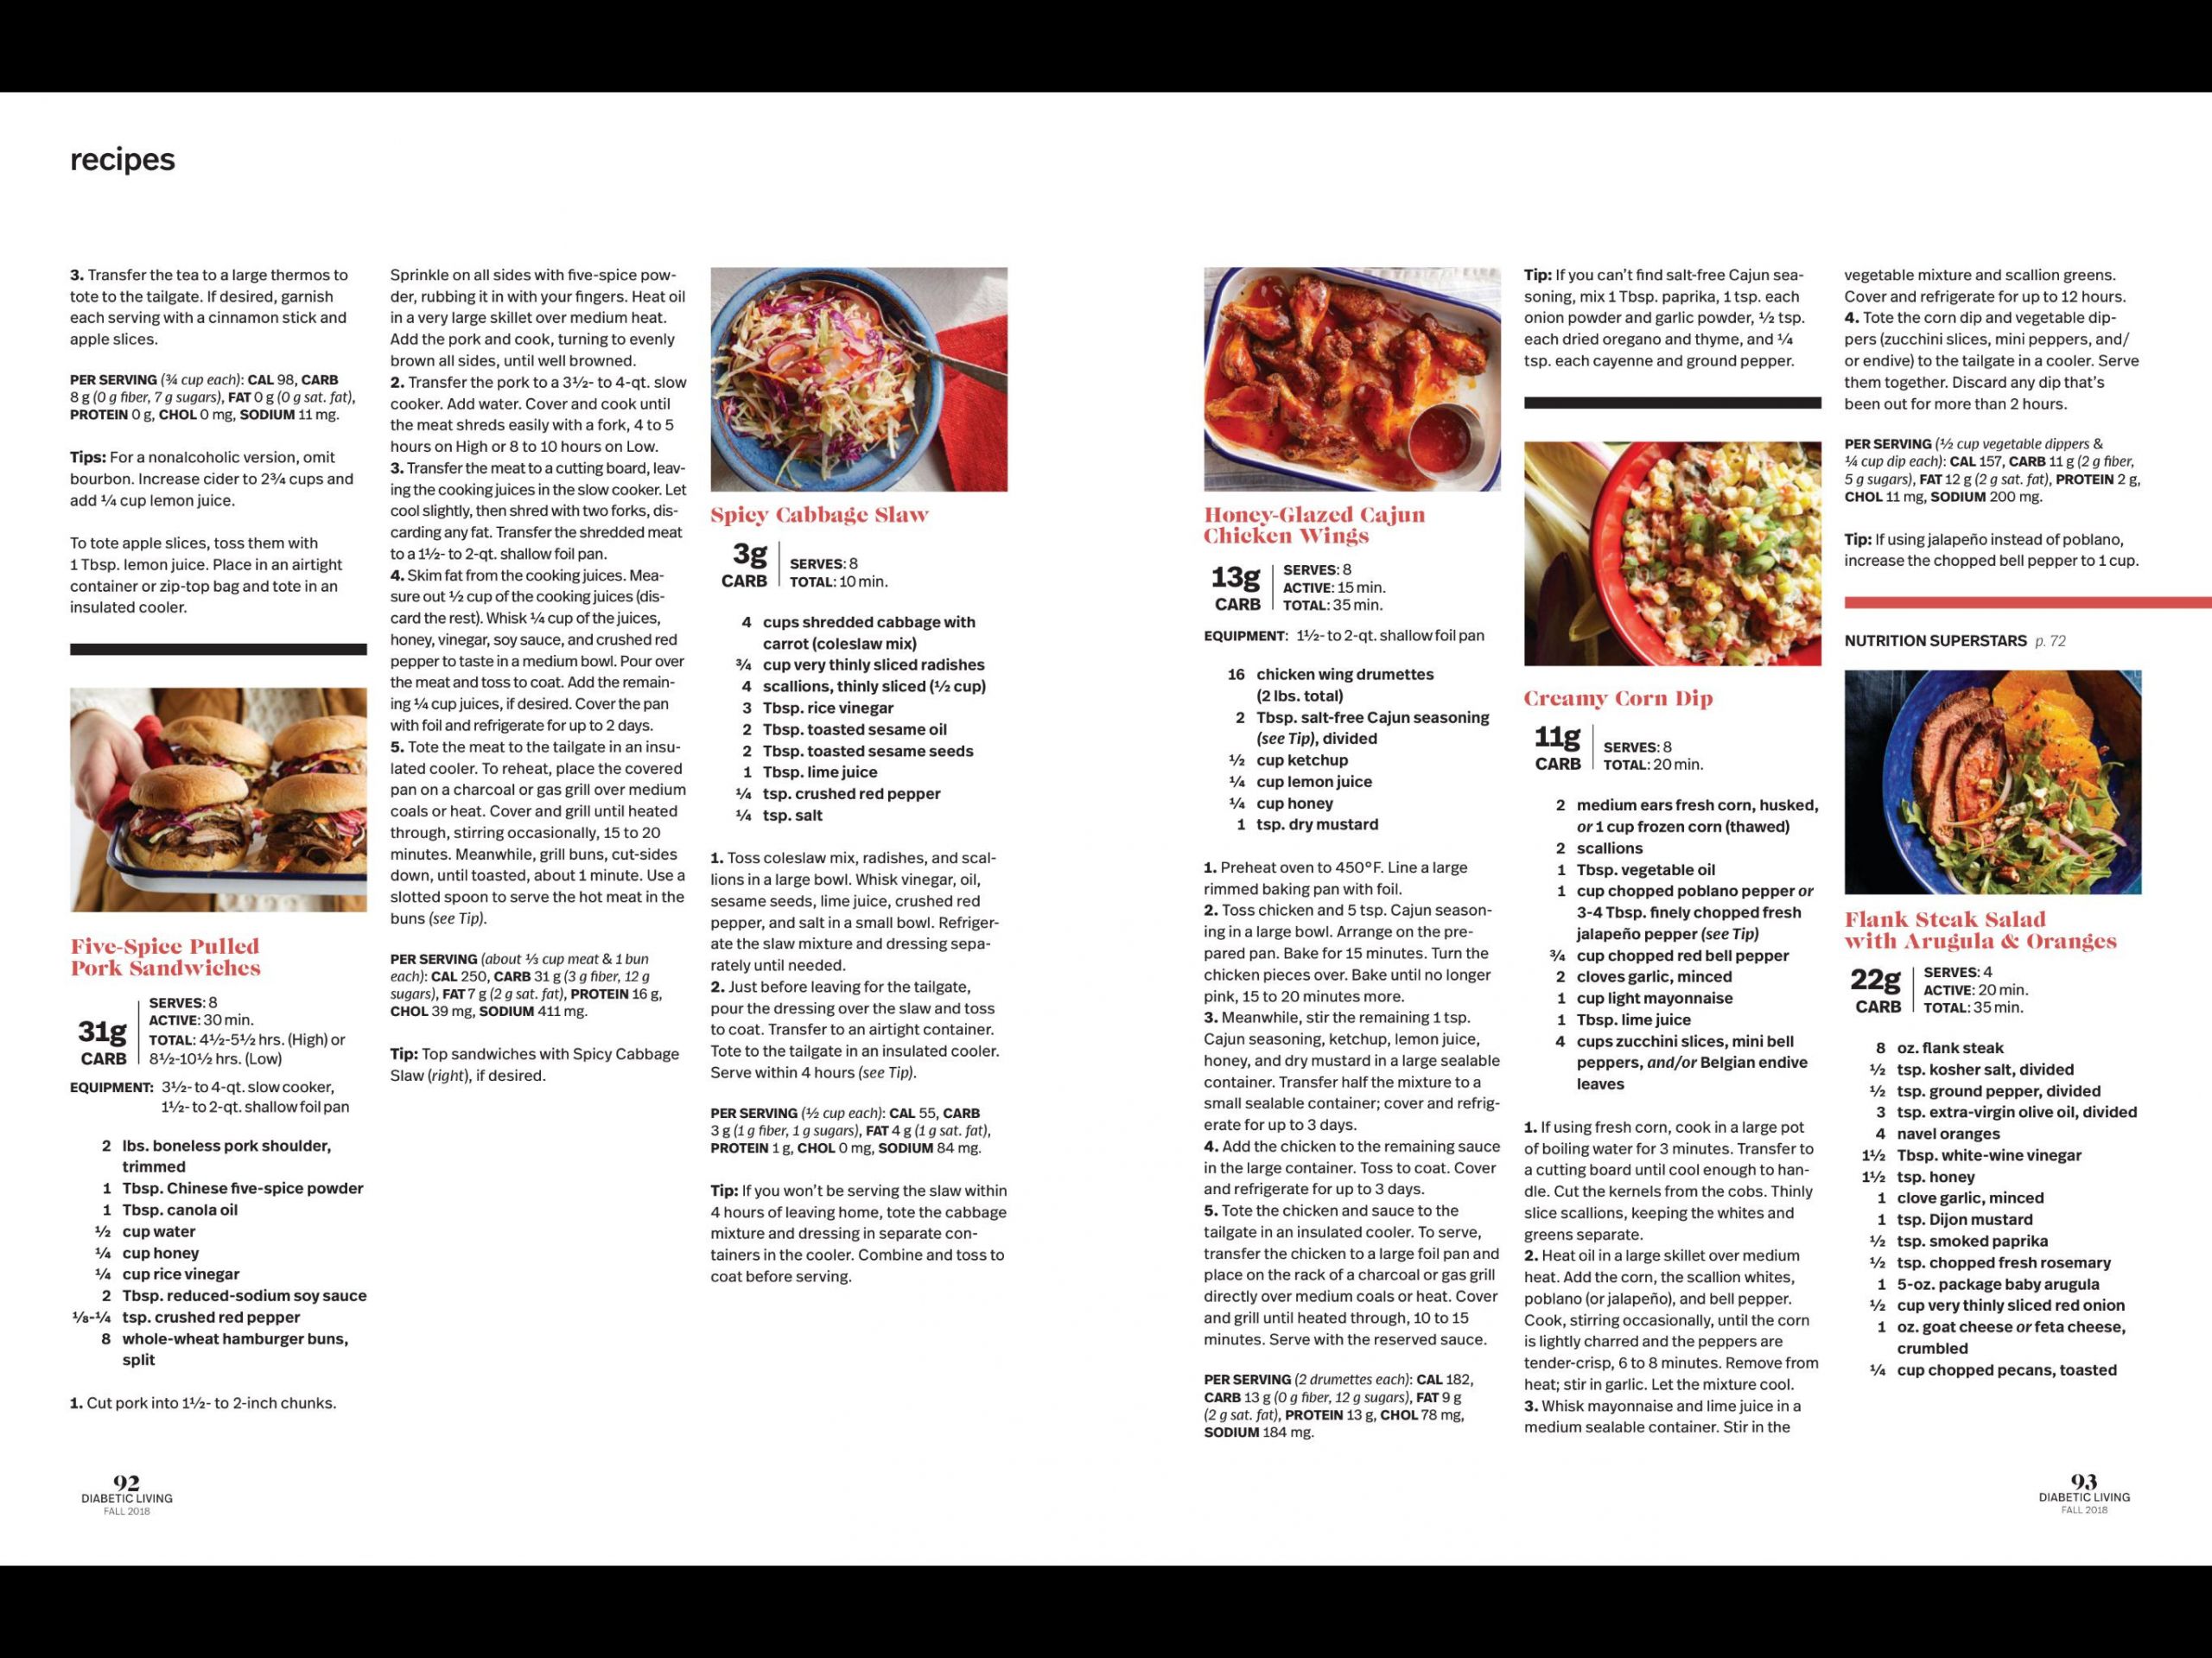 Diabetic Living Magazine Recipes
 "Recipes" from Diabetic Living Magazine Fall 2018 Read